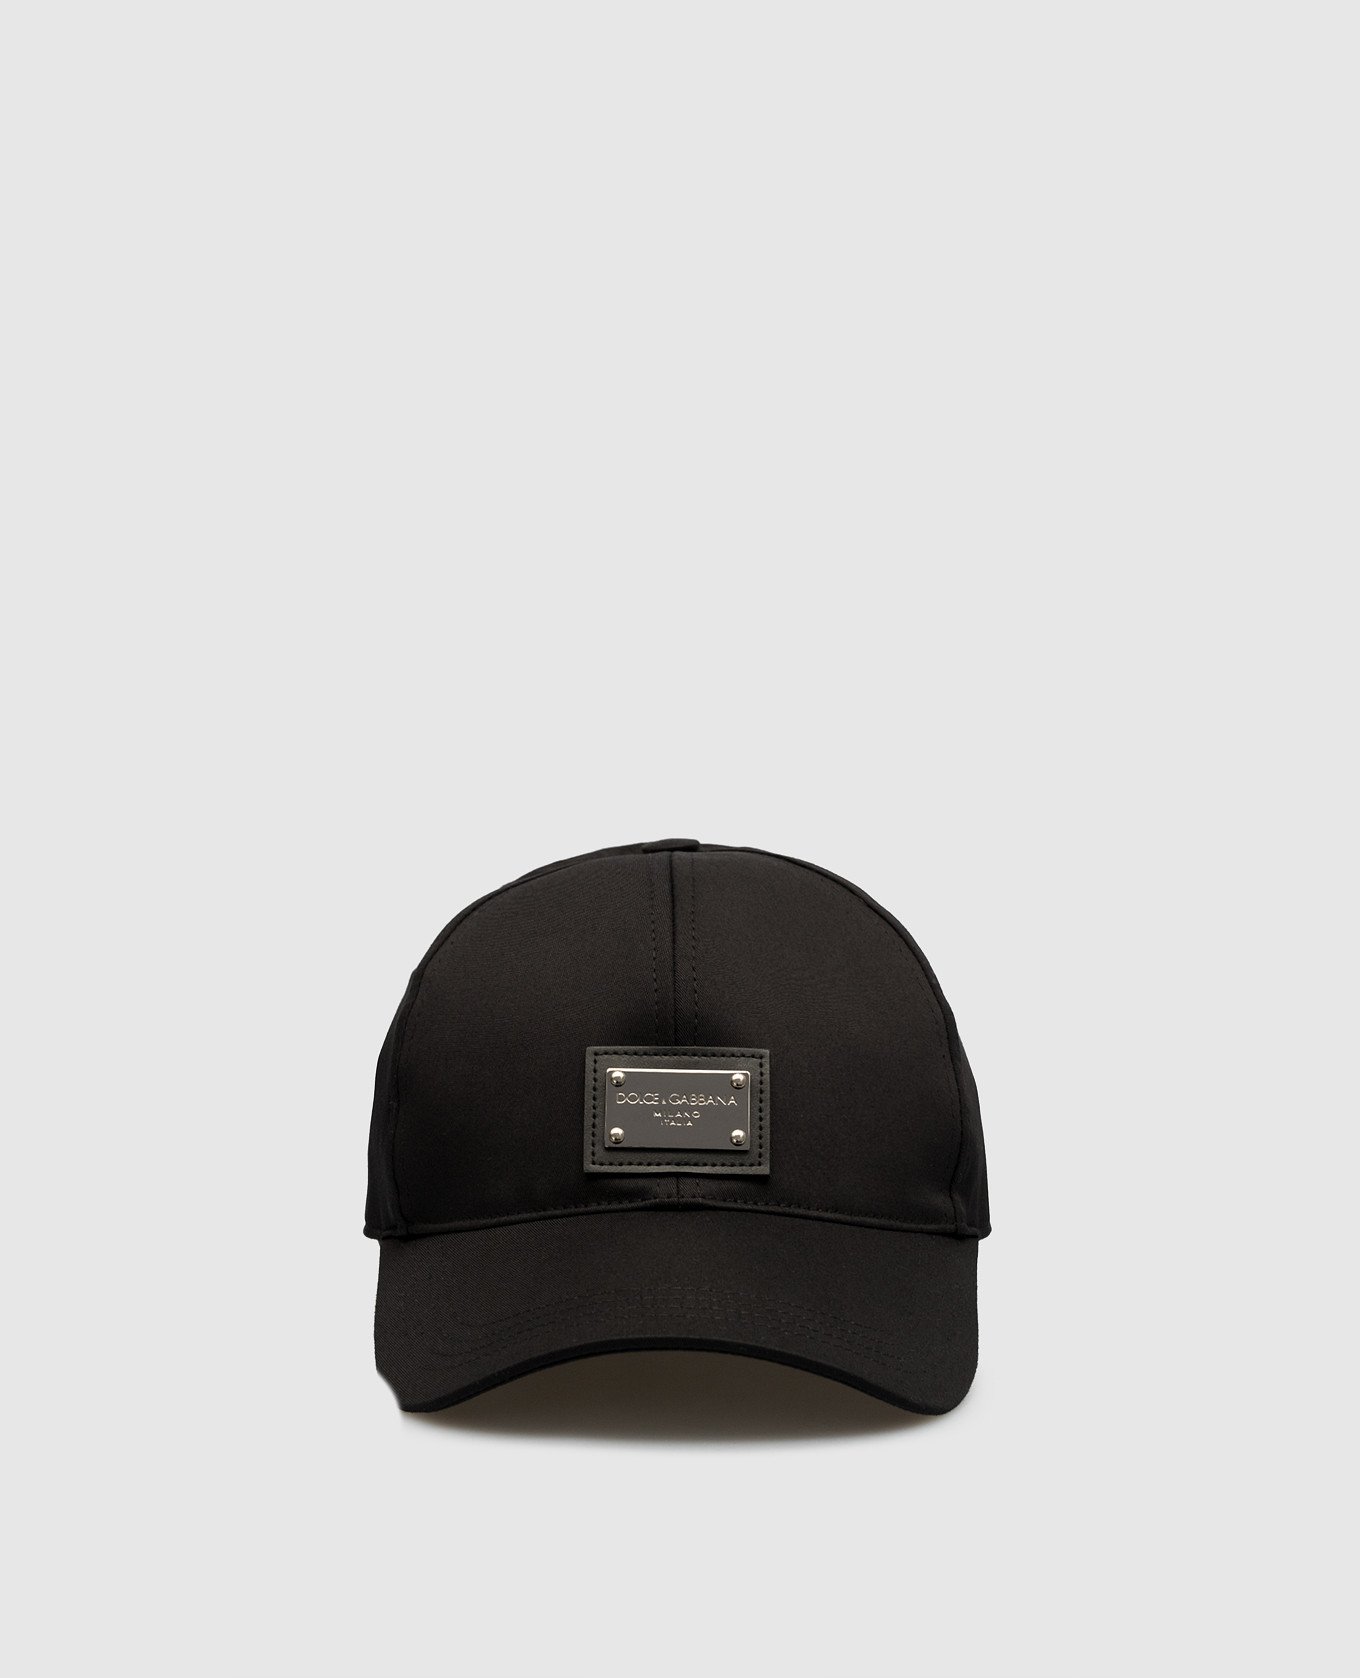 Black cap with logo